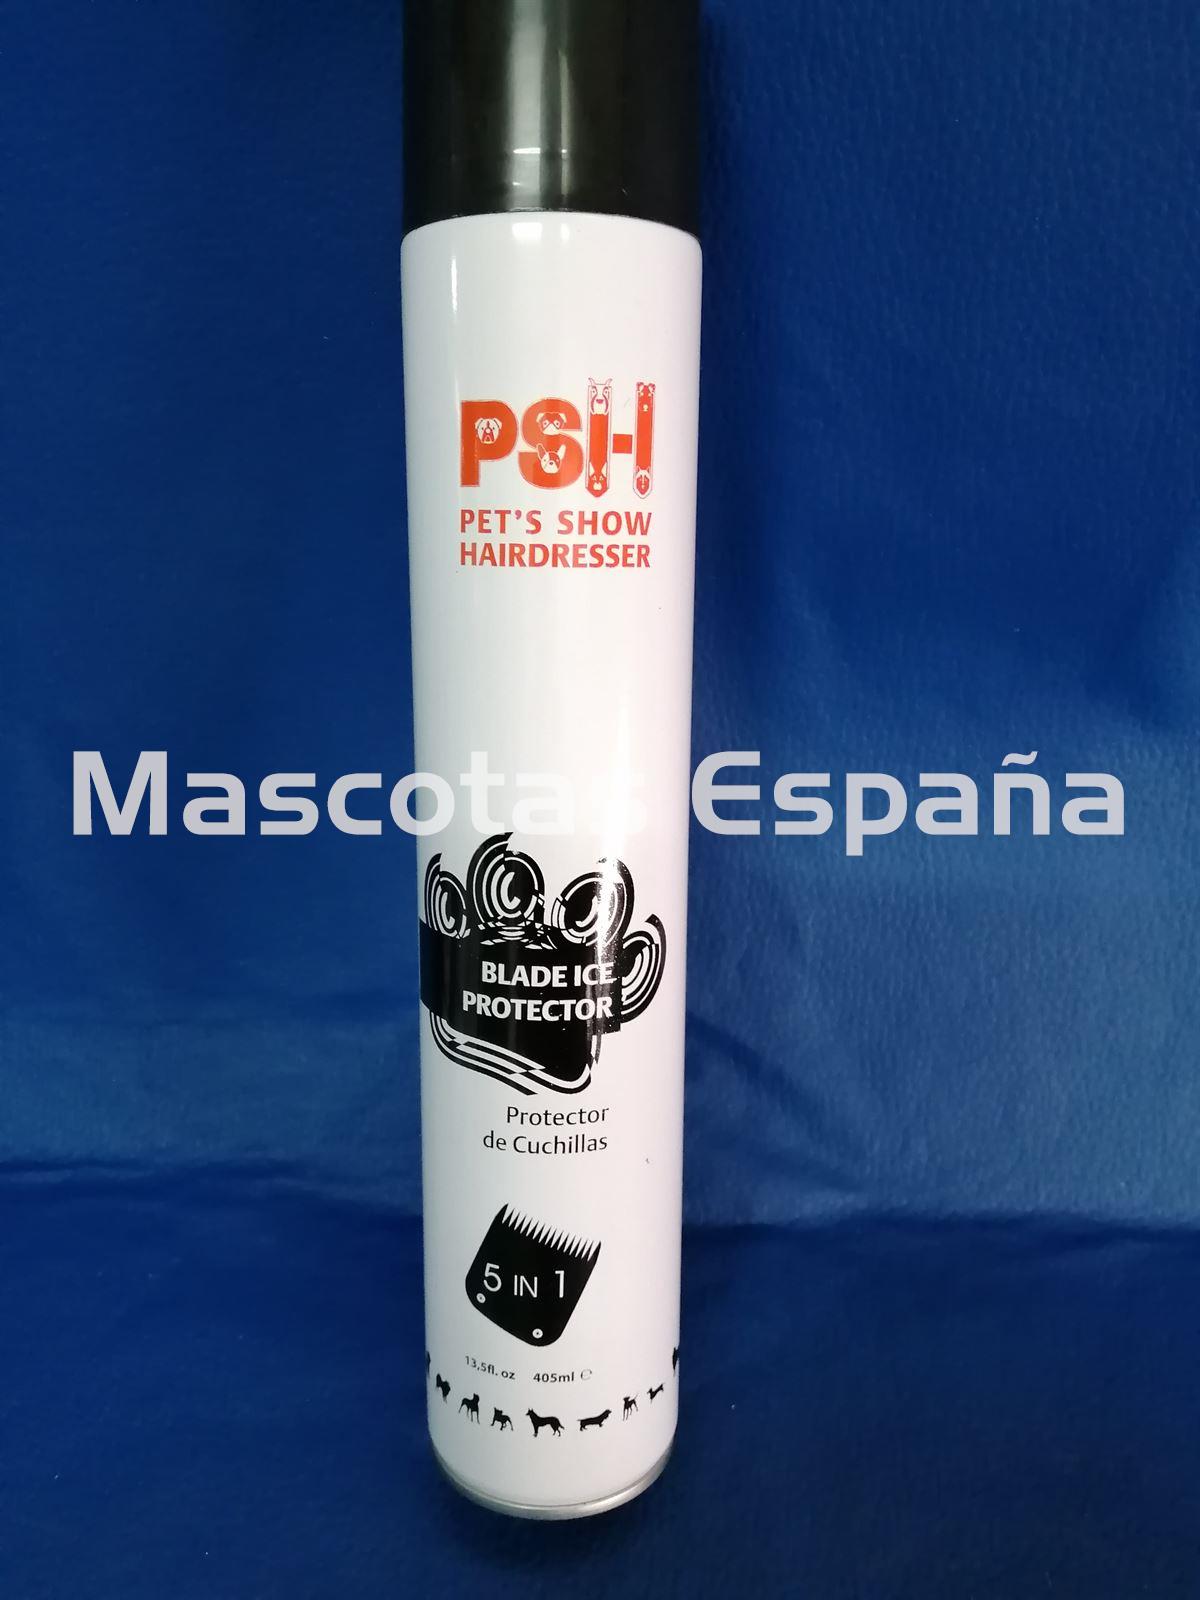 PSH Blade Ice Protector (Protector de Cuchillas) 405ml - Imagen 1